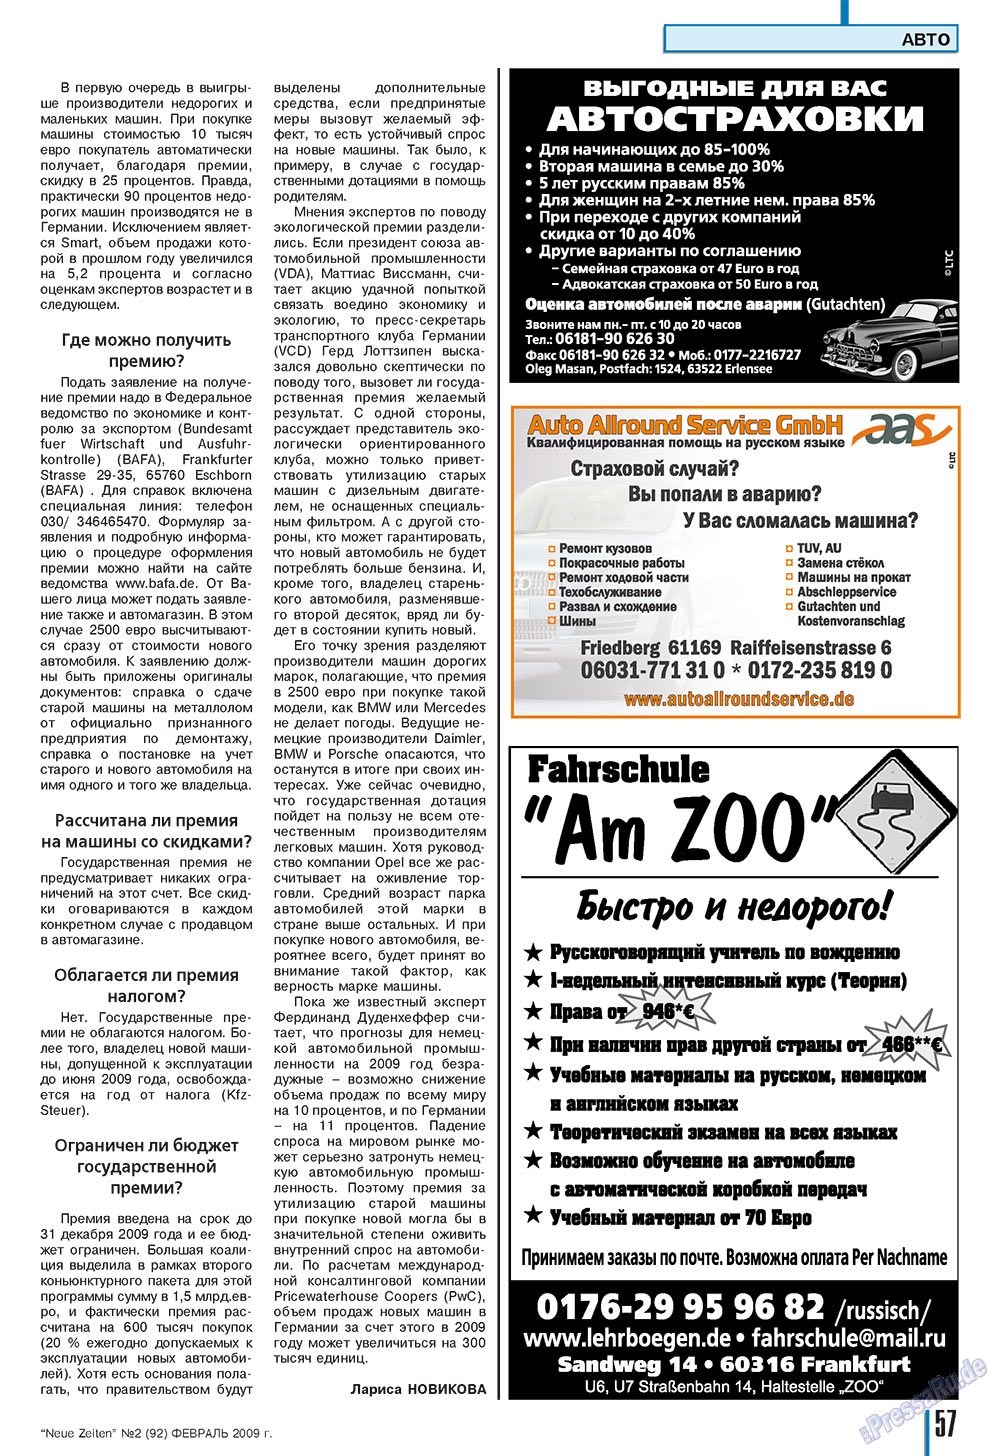 Neue Zeiten (журнал). 2009 год, номер 2, стр. 57